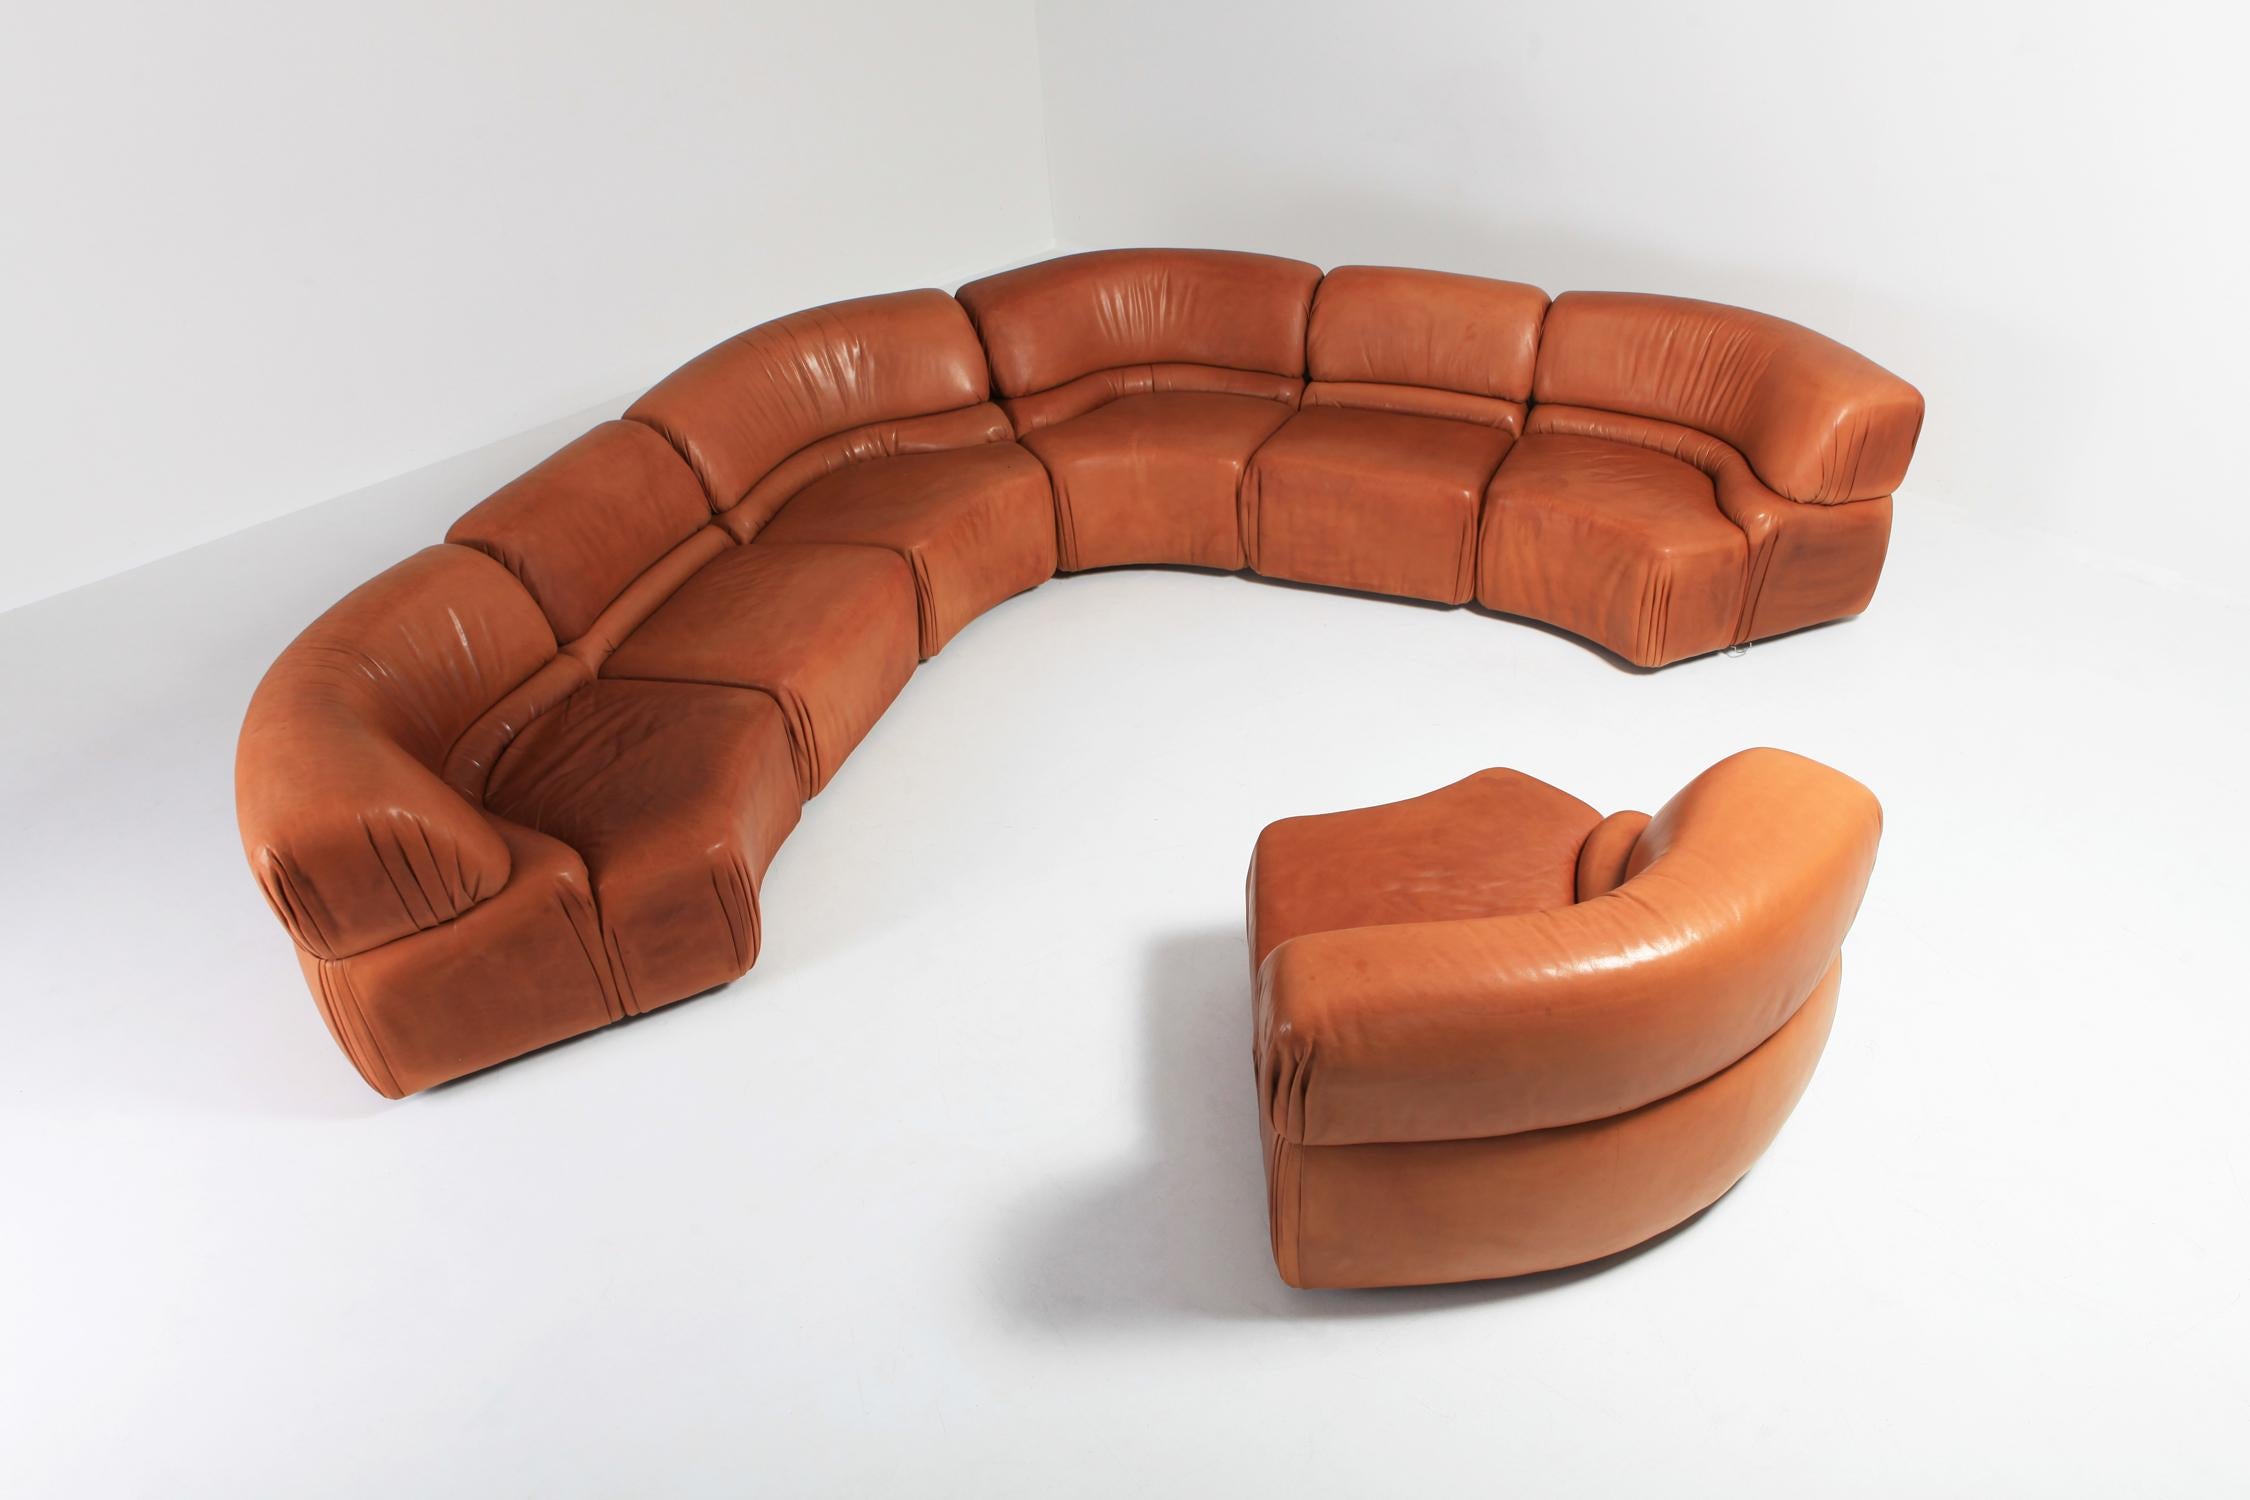 20th Century 'Cosmos' Sectional Cognac Leather Sofa by De Sede, Switzerland